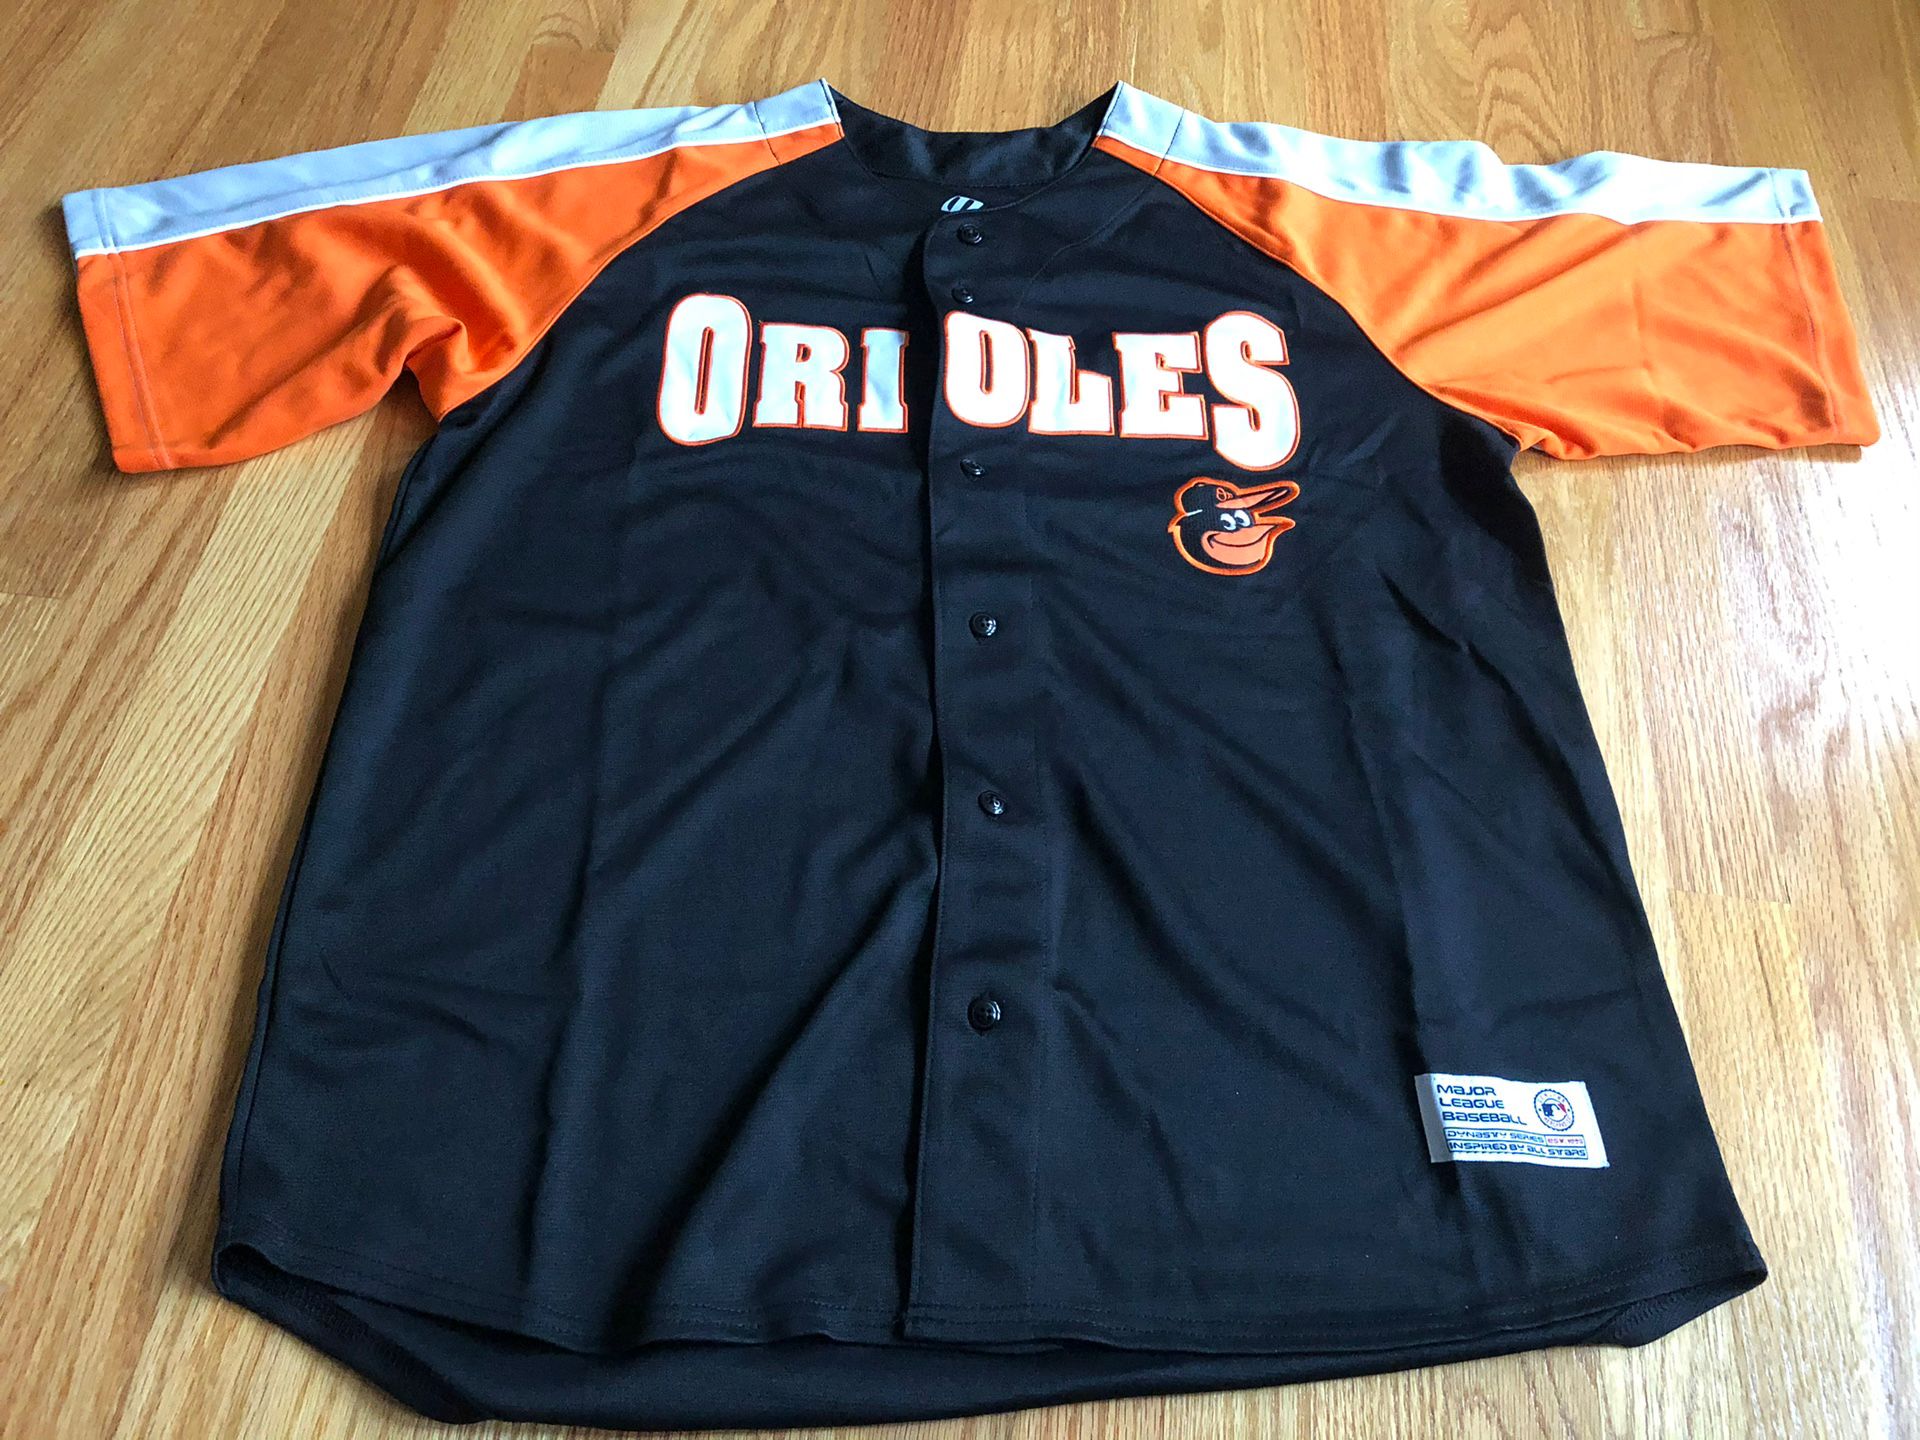 New MLB Black Orioles Jersey Dynasty Series Size XL (48-50)